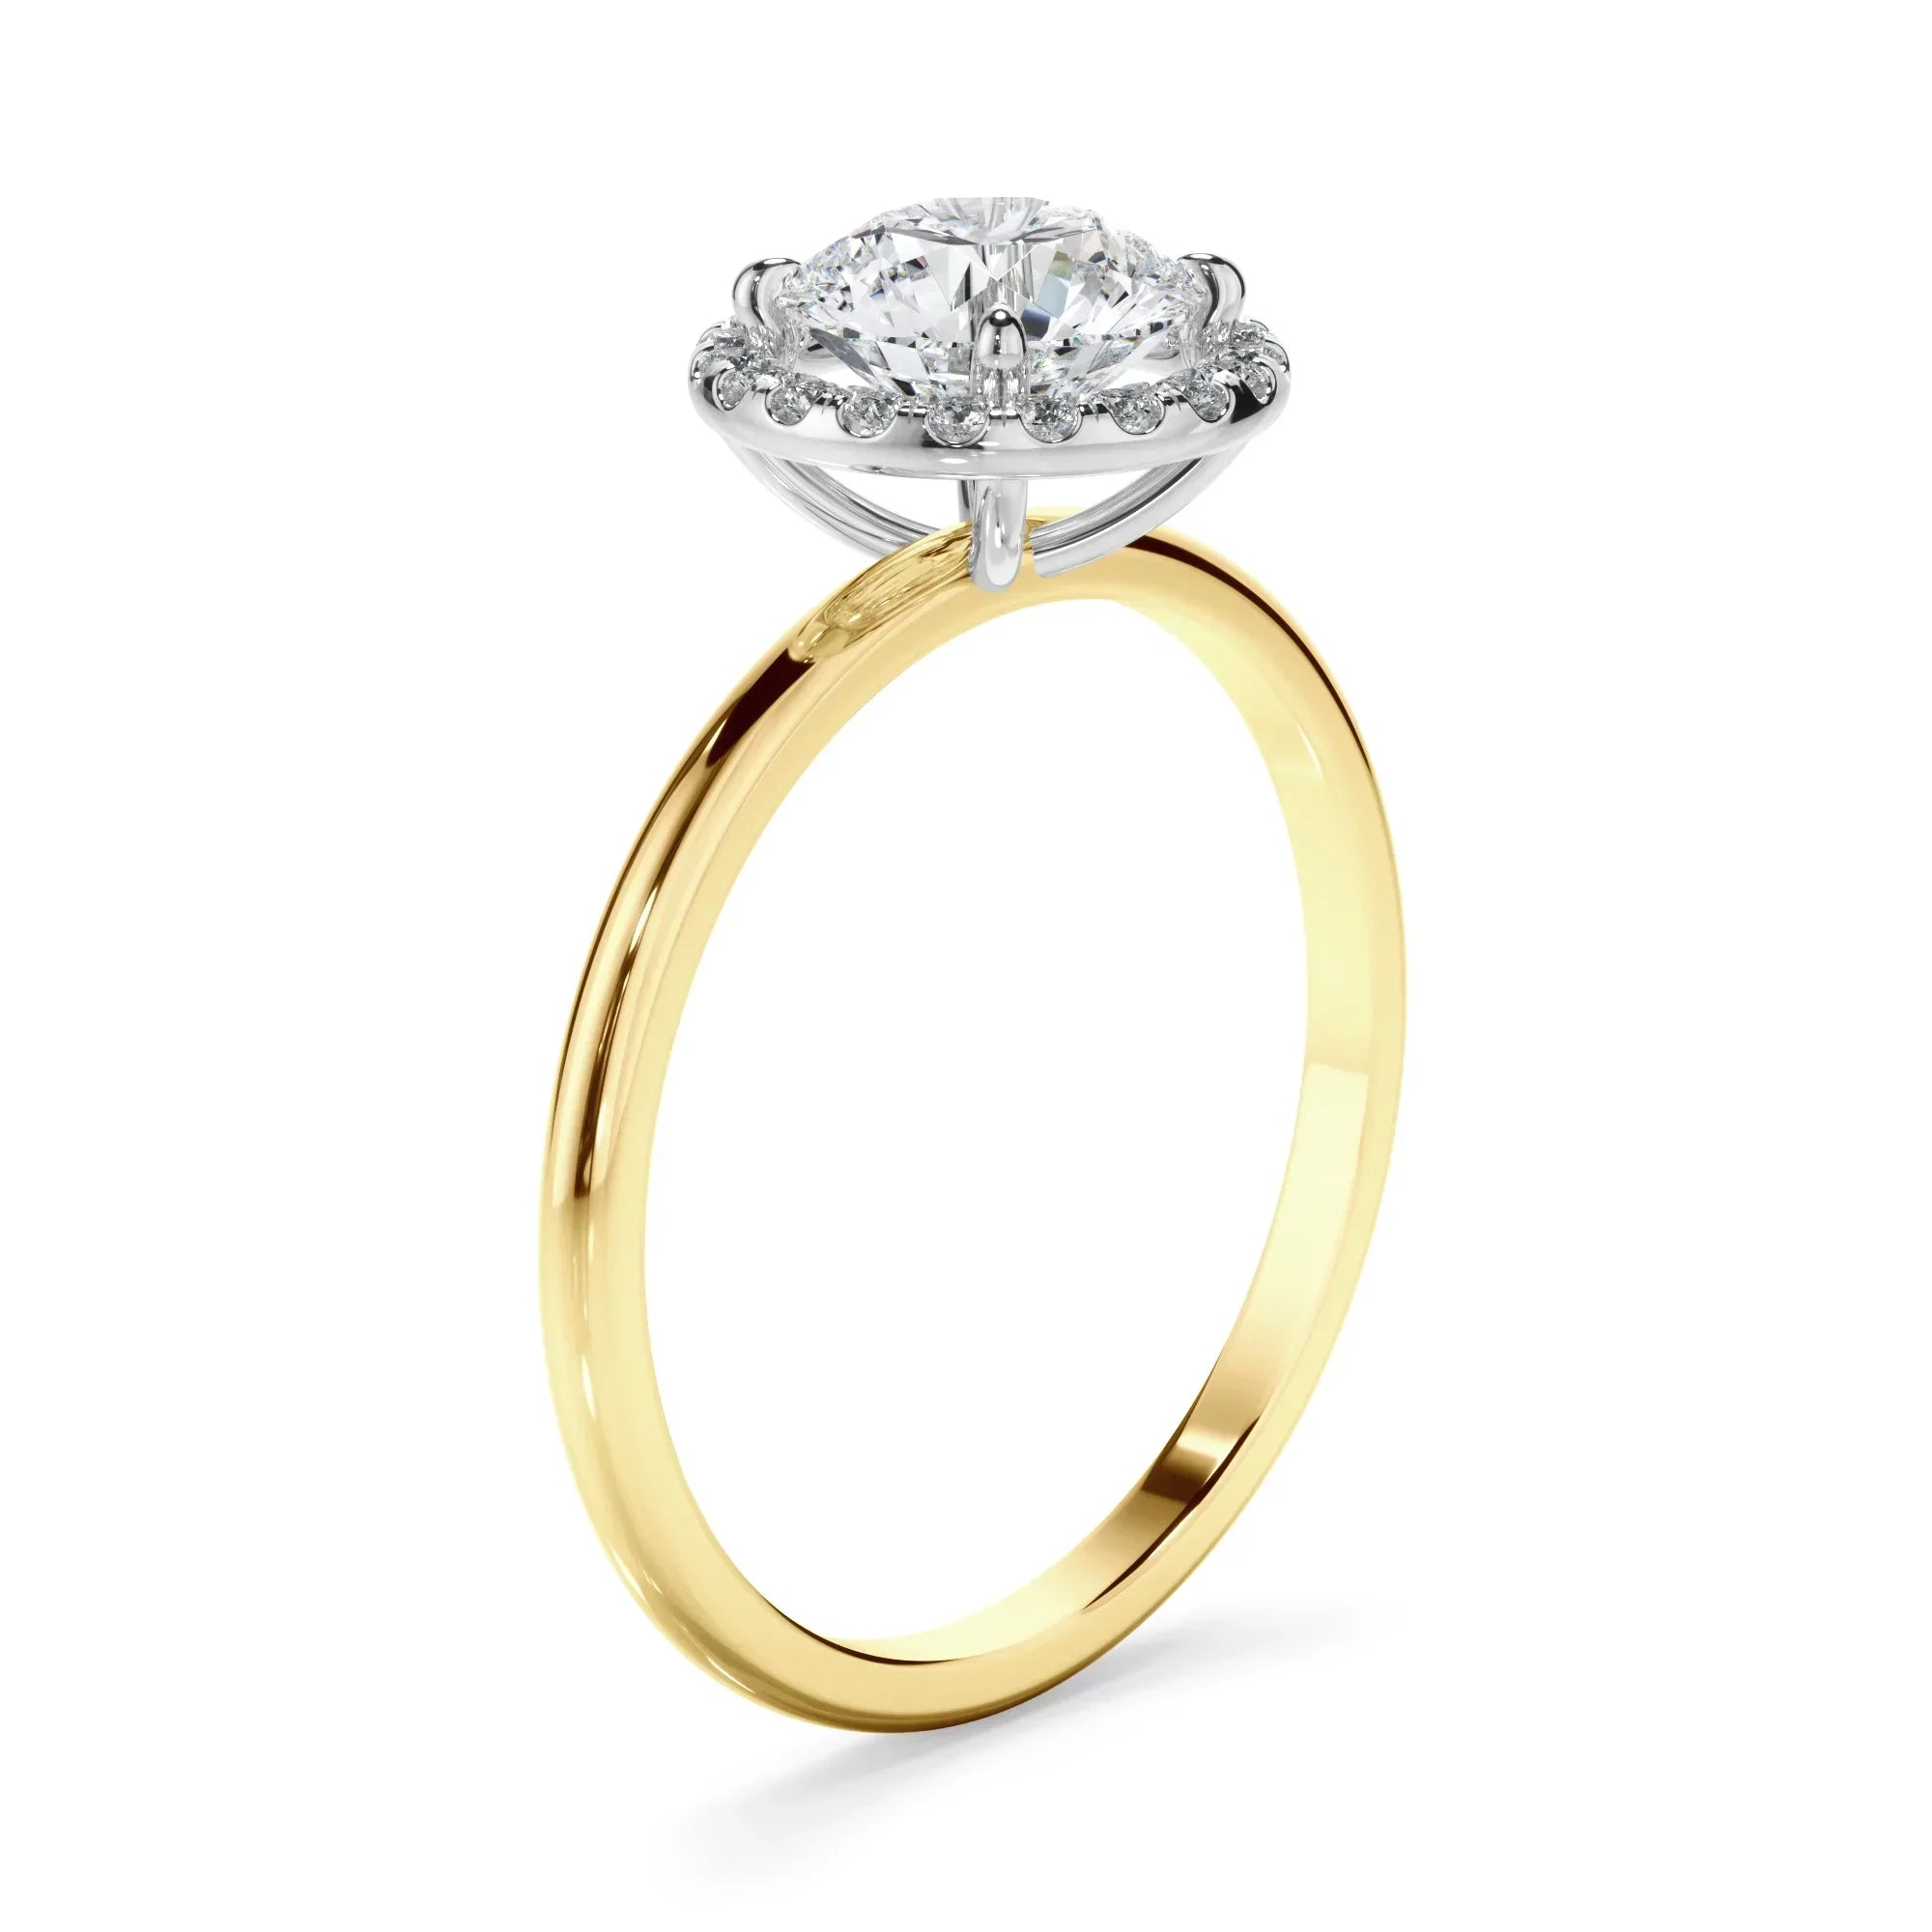 Round Brilliant Cut Diamond Halo Engagement Ring